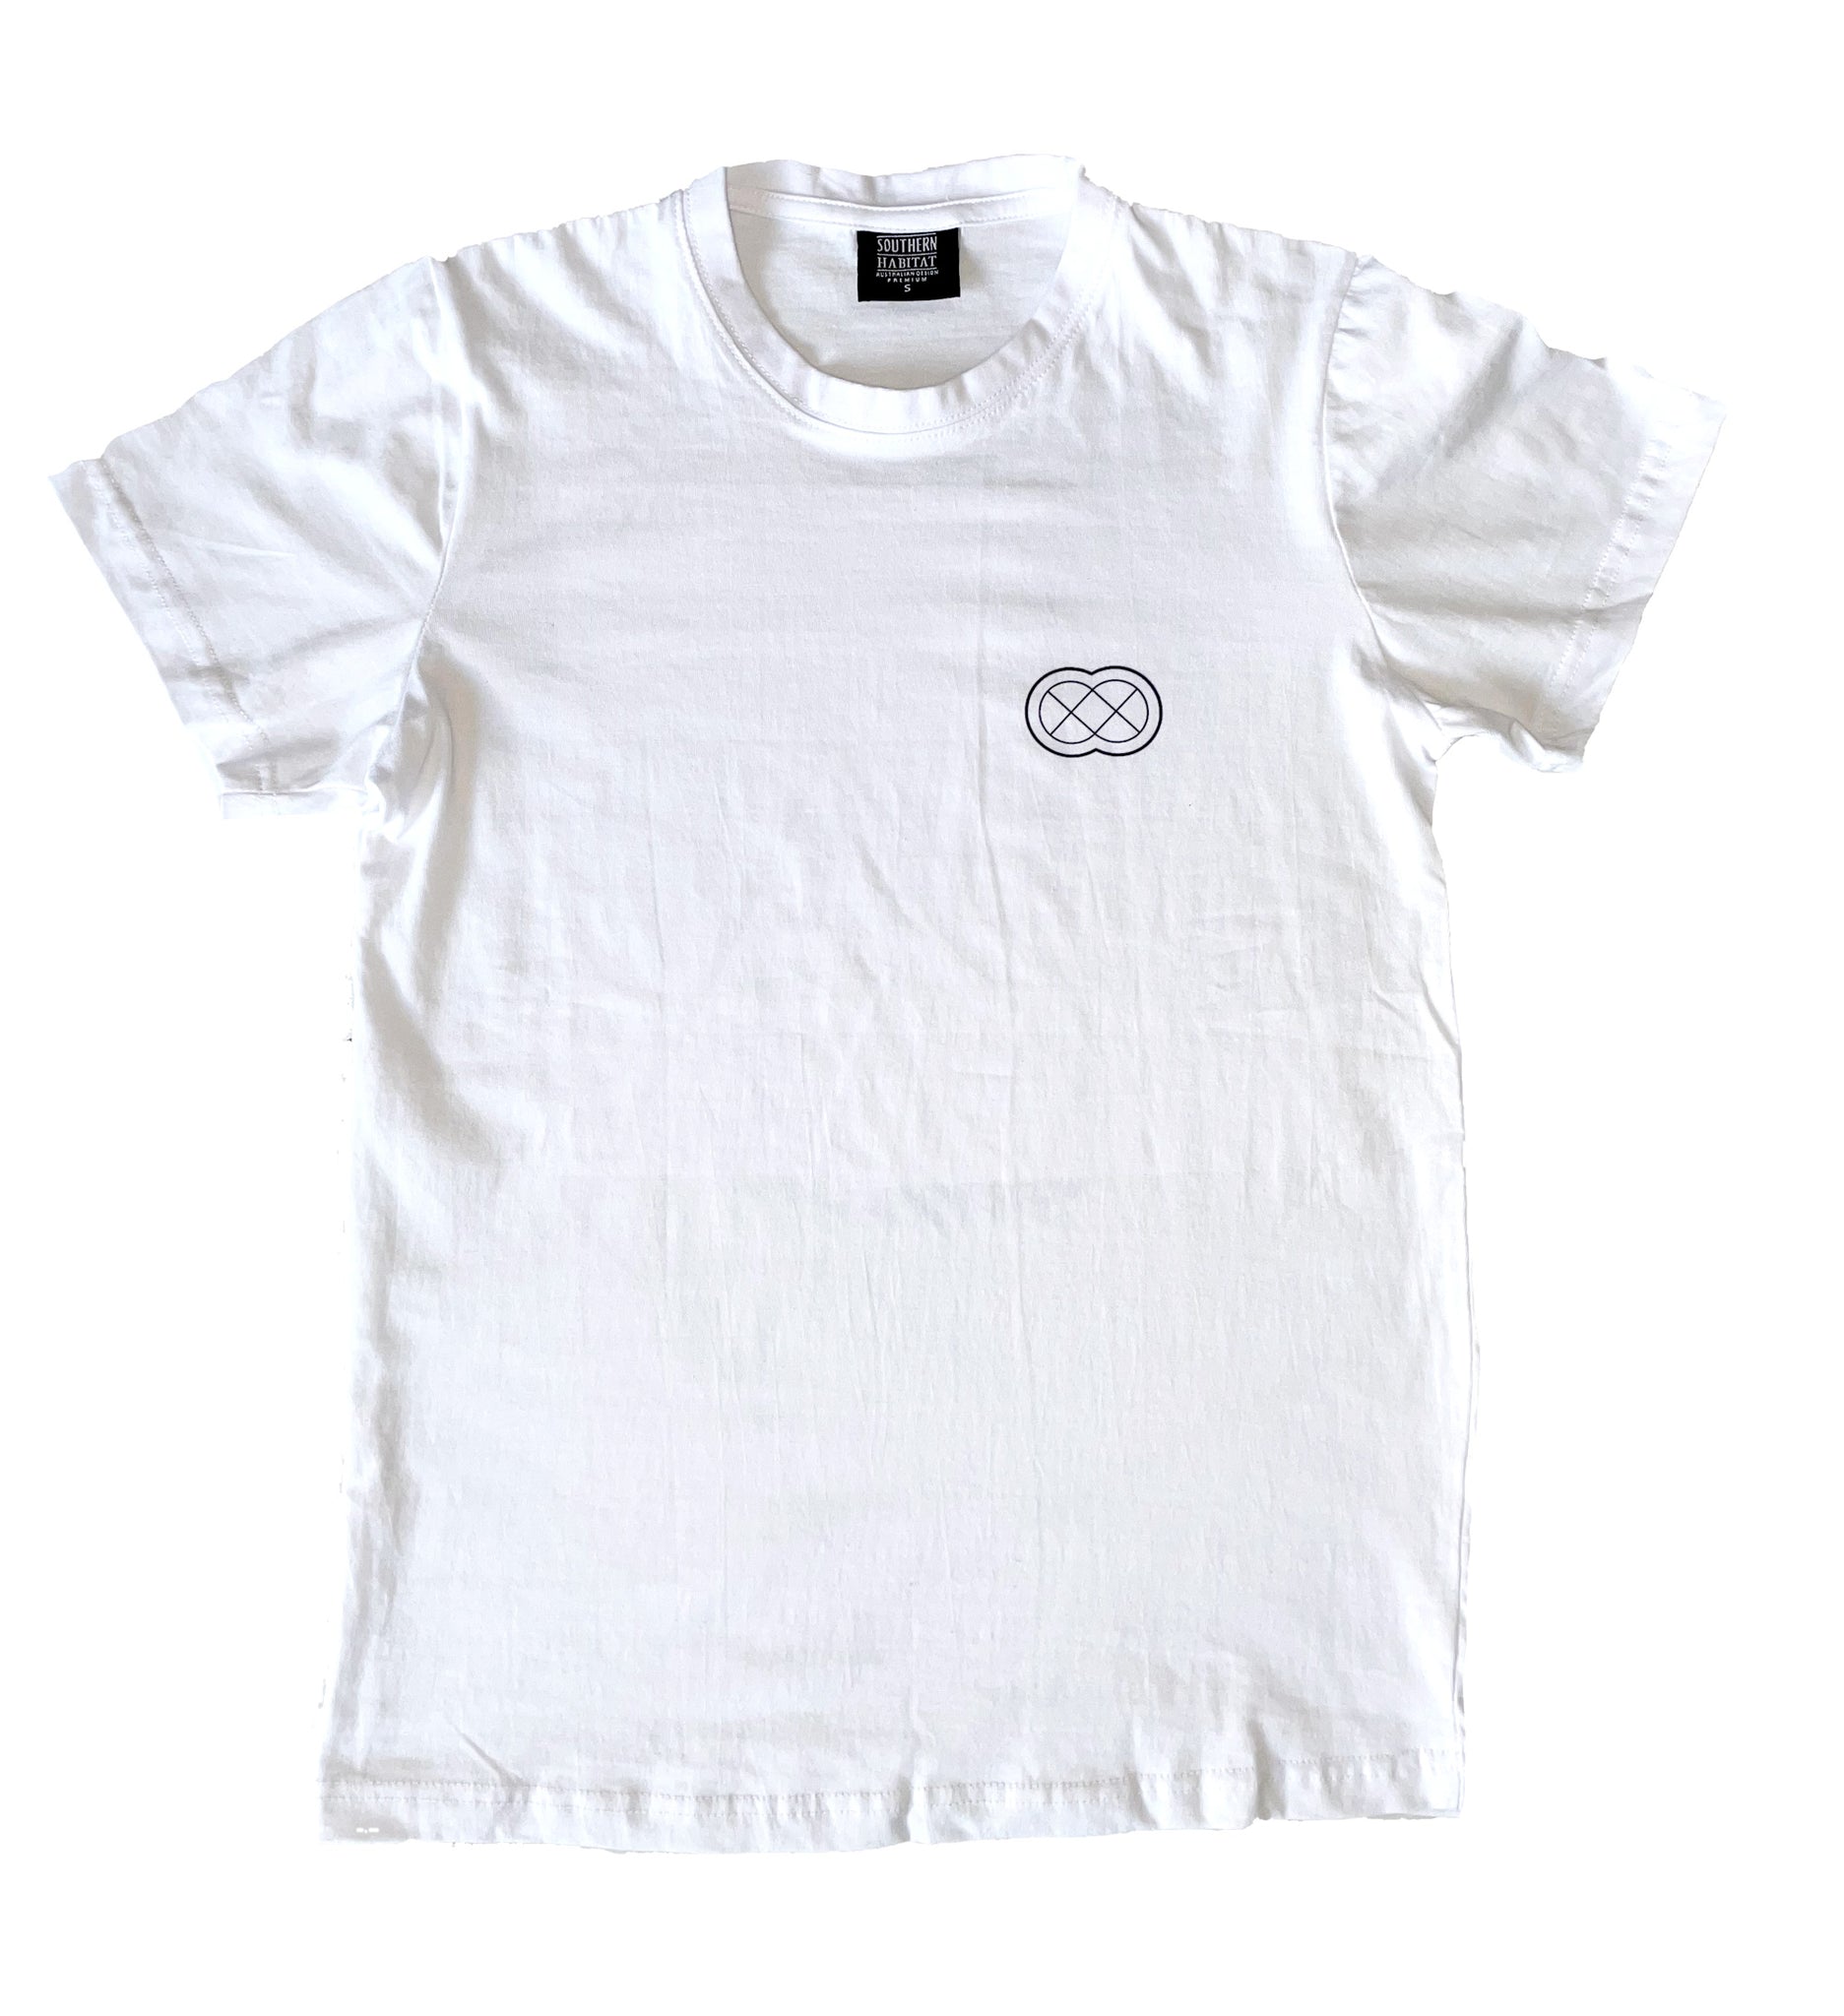 Spoke Motorcycle Festival White T-shirt - Spoke Logo